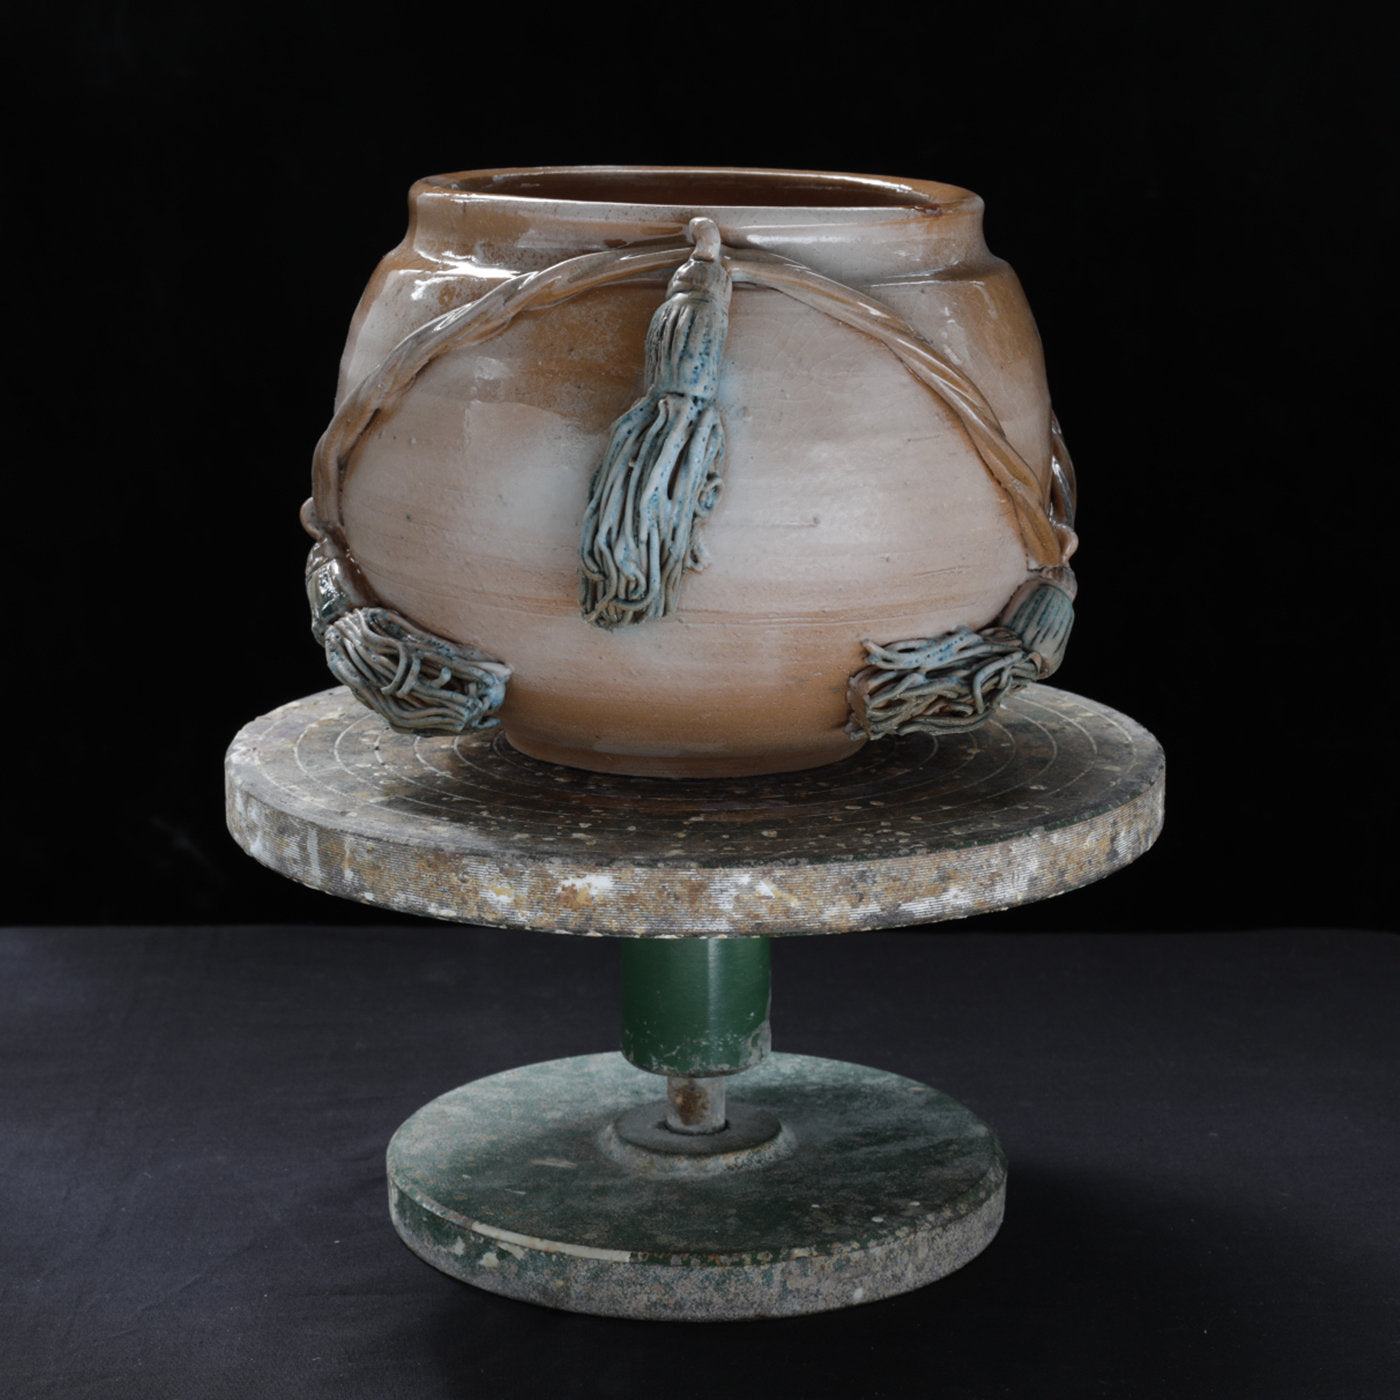 Vase With Tassels #5 - Alternative view 1